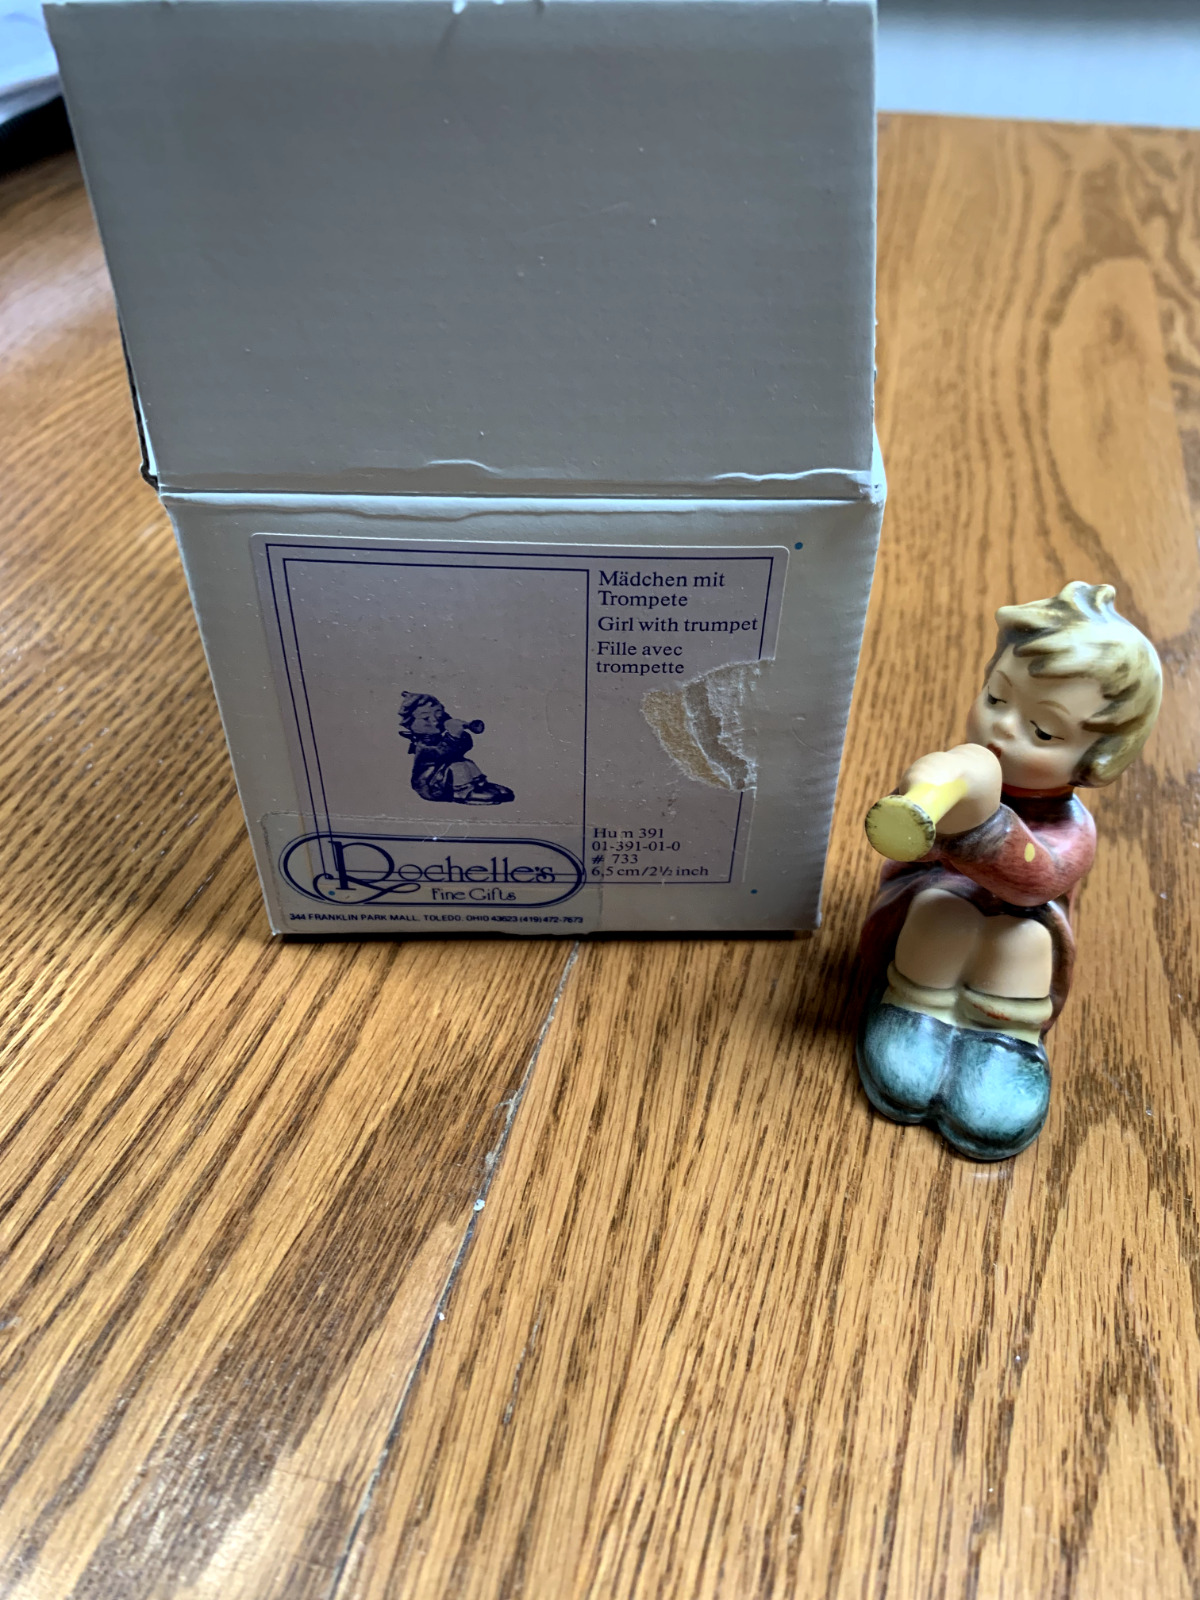 Hummel figurine #391 "Girl with Trumpet" in original box